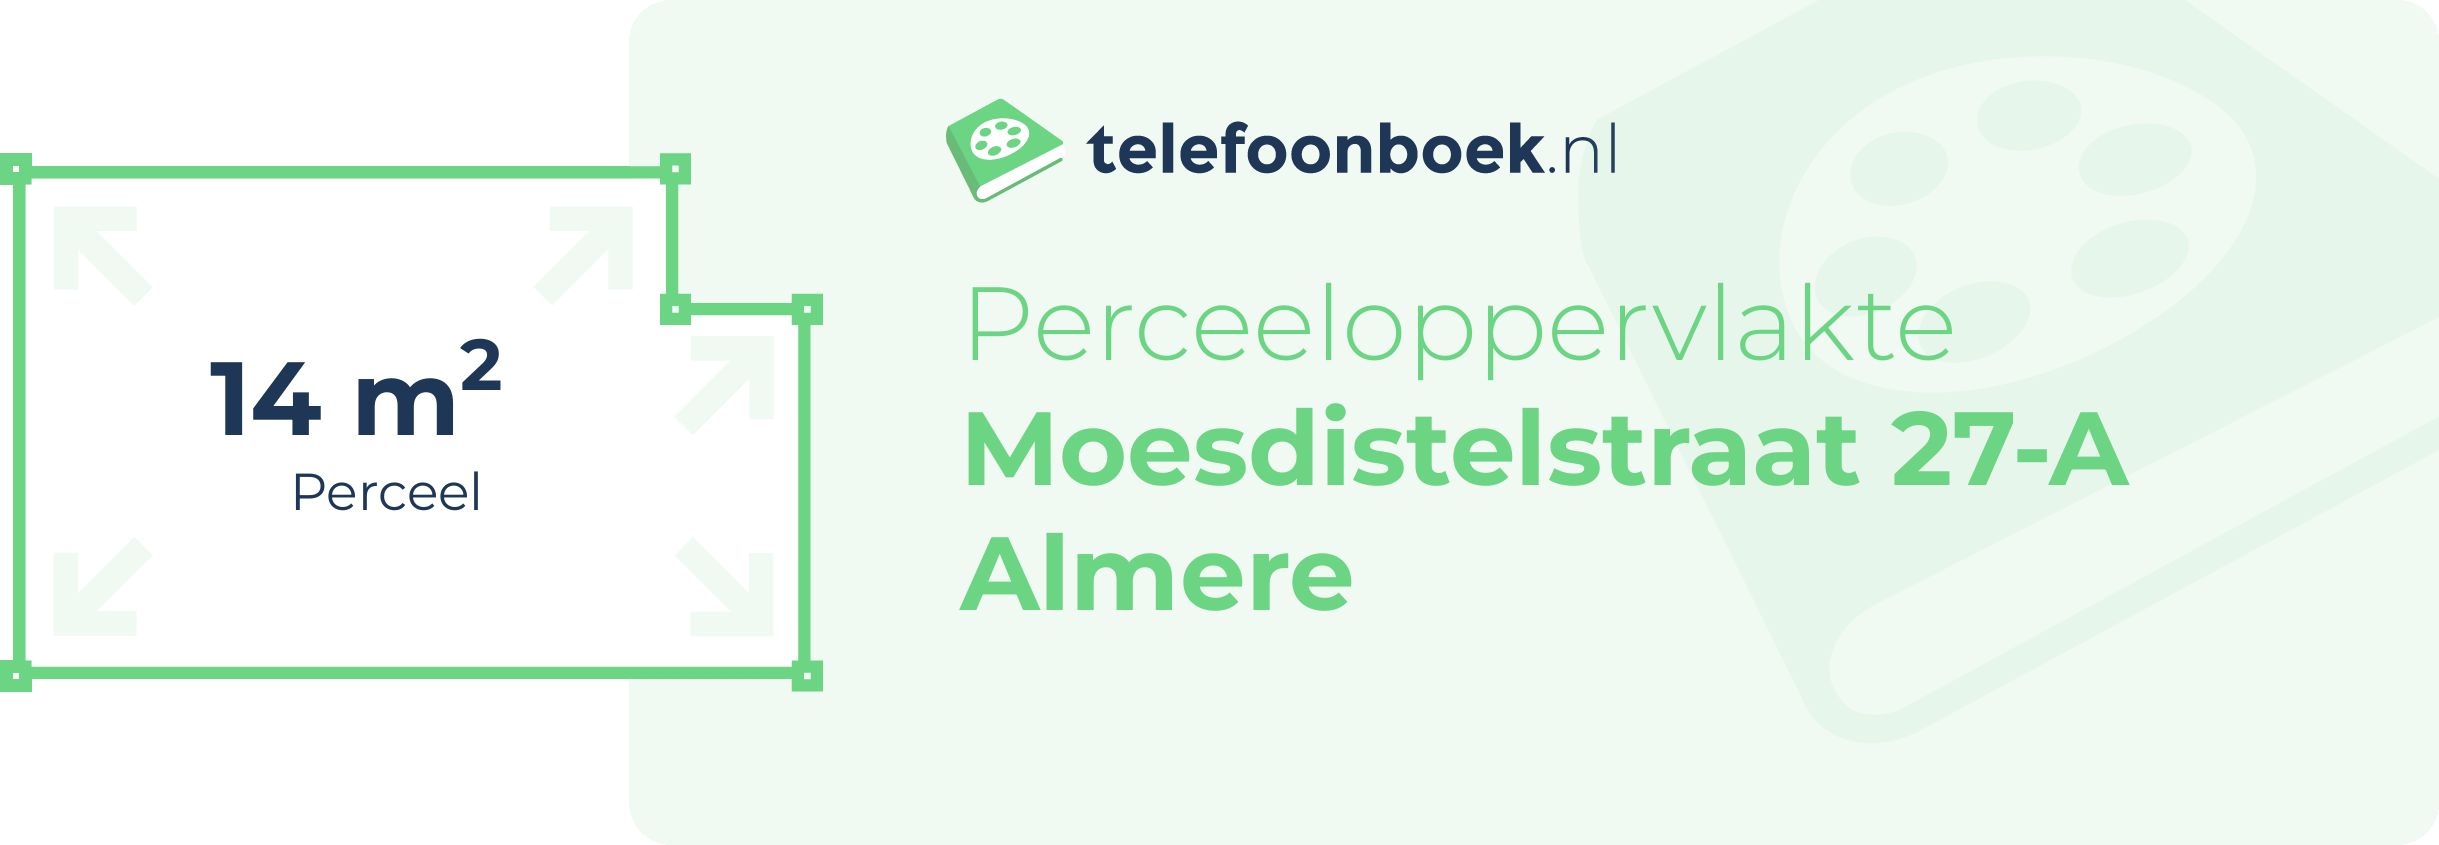 Perceeloppervlakte Moesdistelstraat 27-A Almere